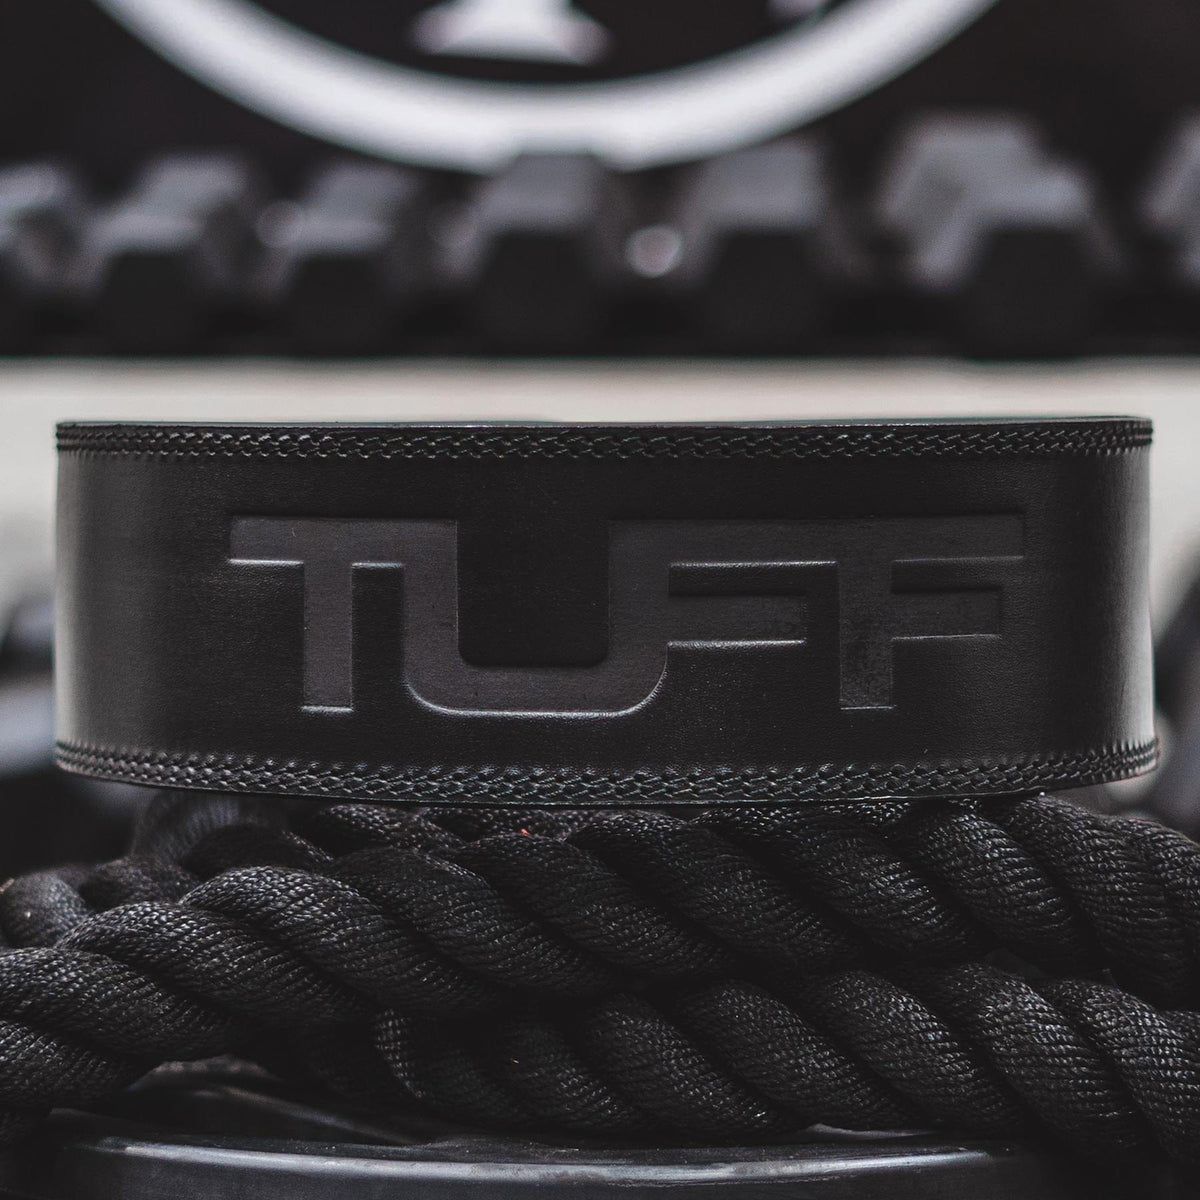 TUFF 13mm LEATHER LEVER WEIGHT BELT v2 Weight Belt